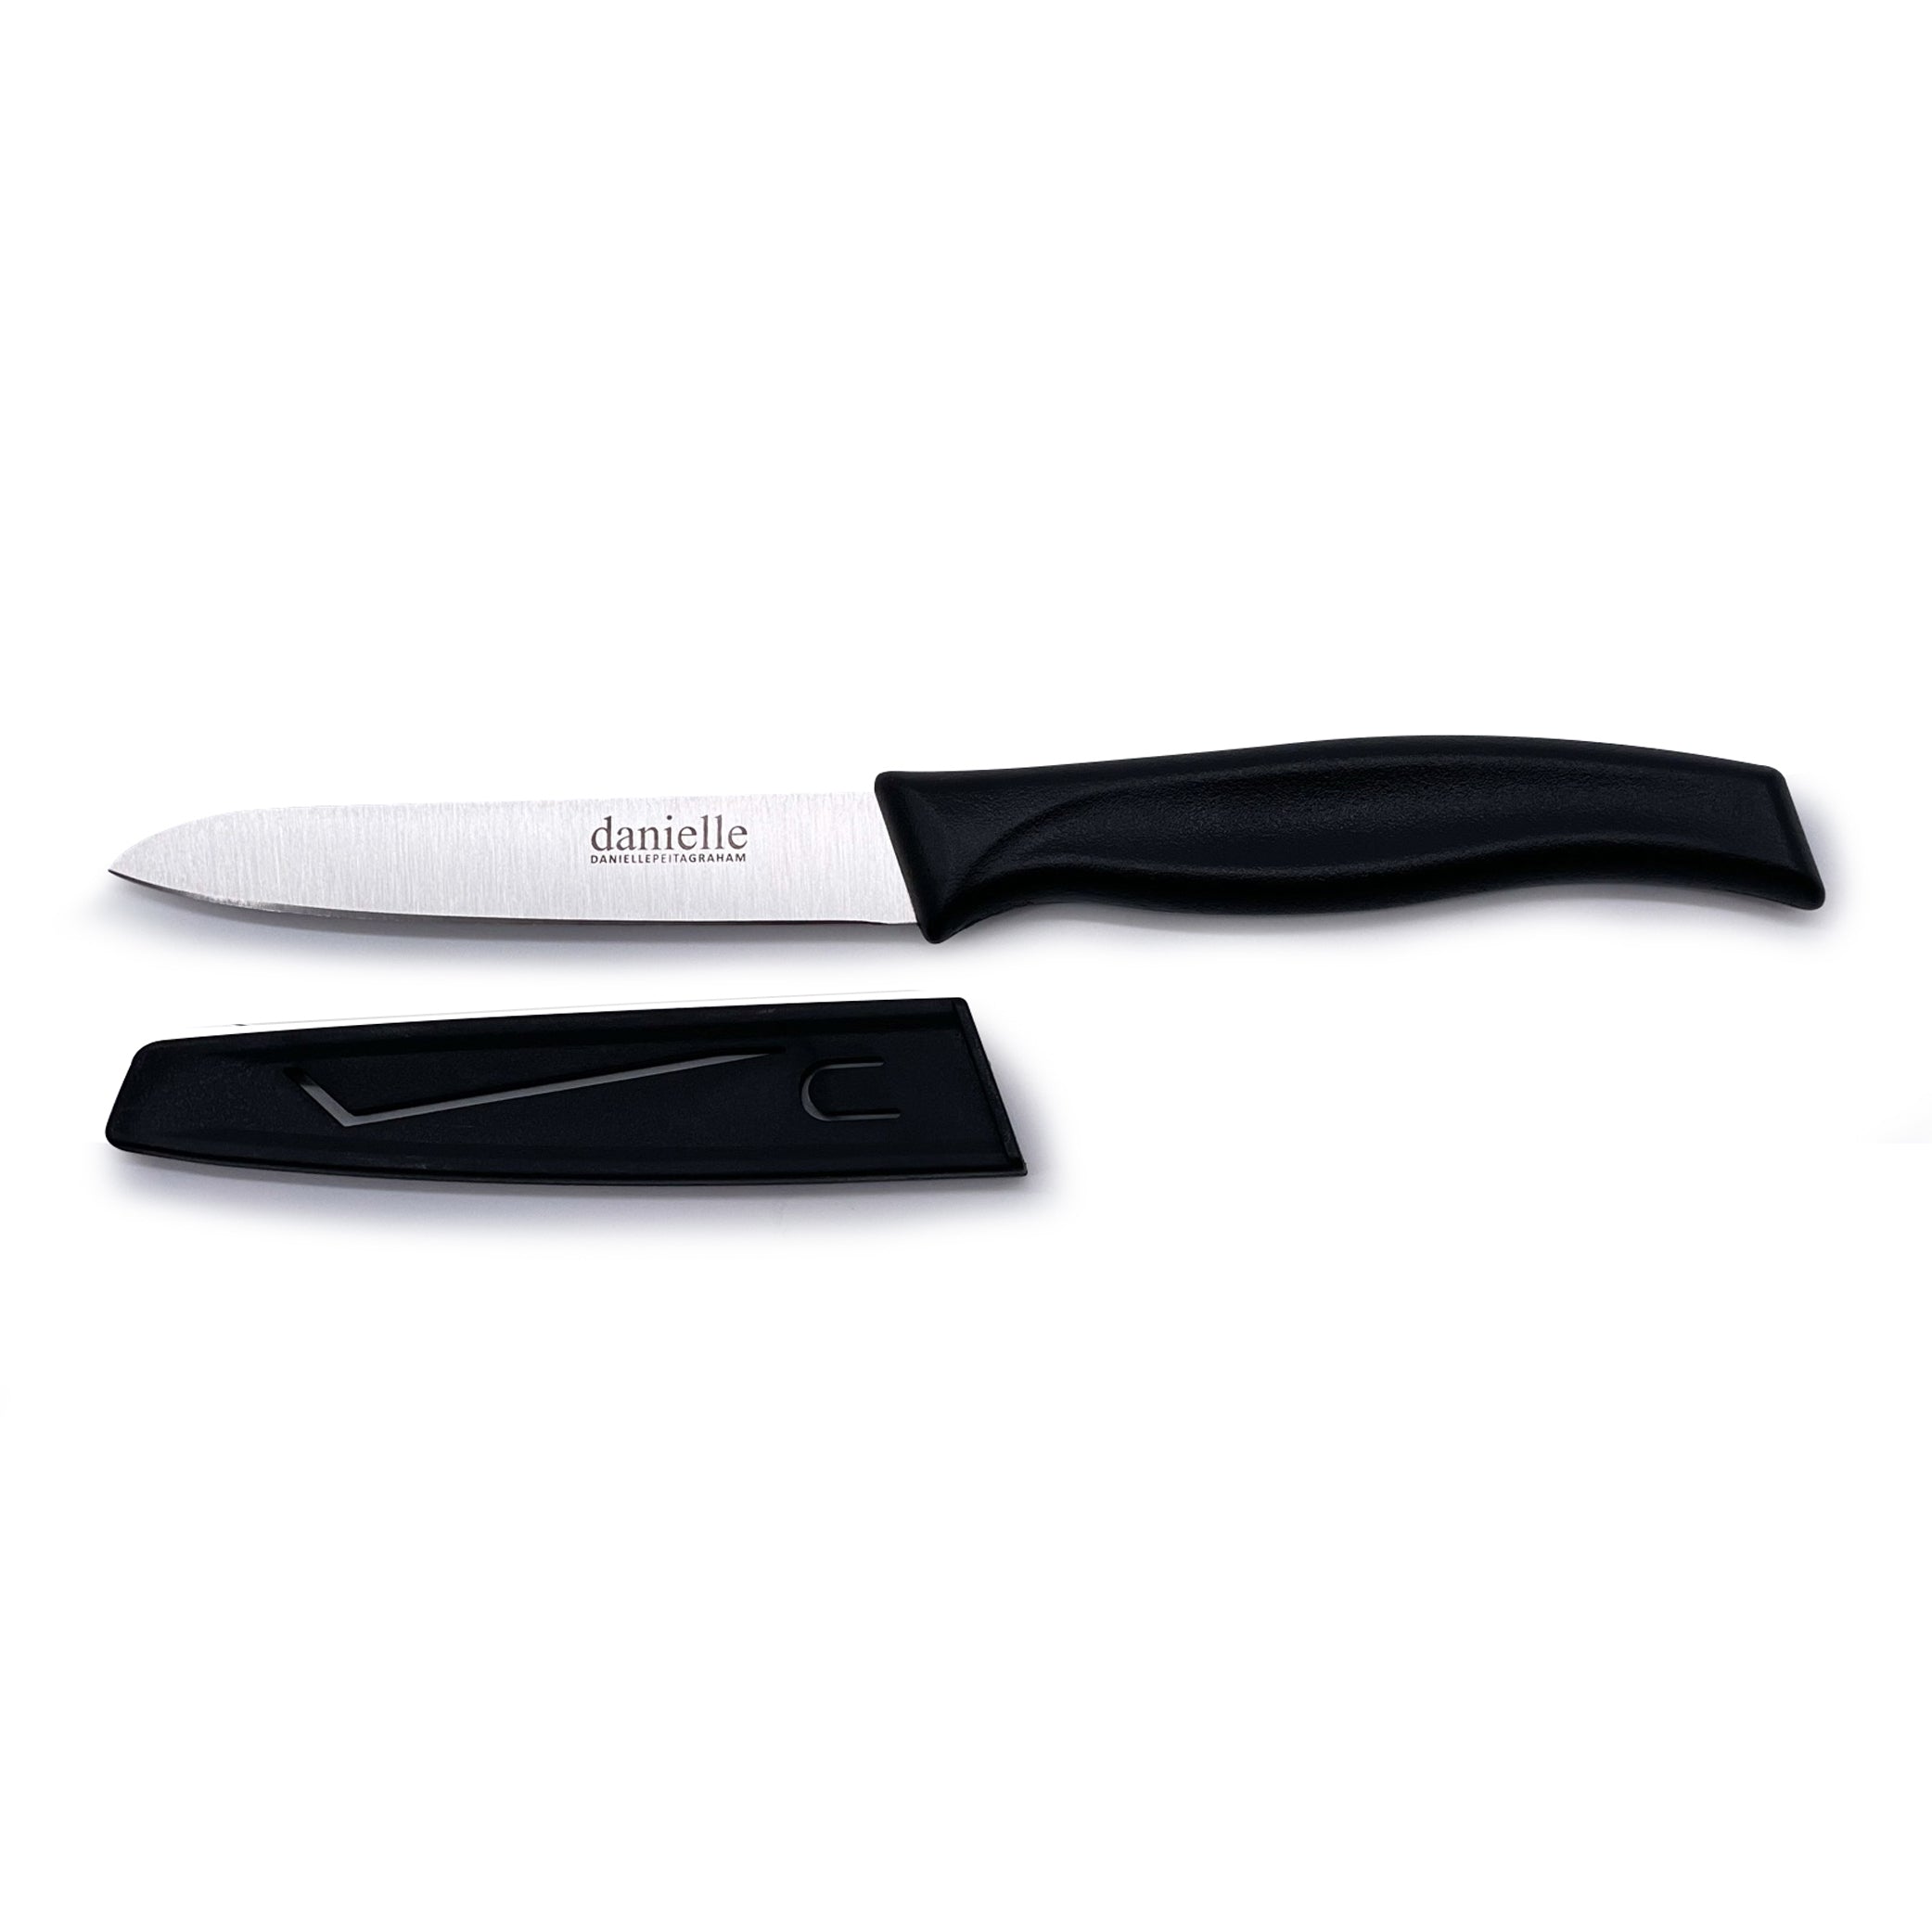 Initial 4” Utility Knife(10 cm)-Black